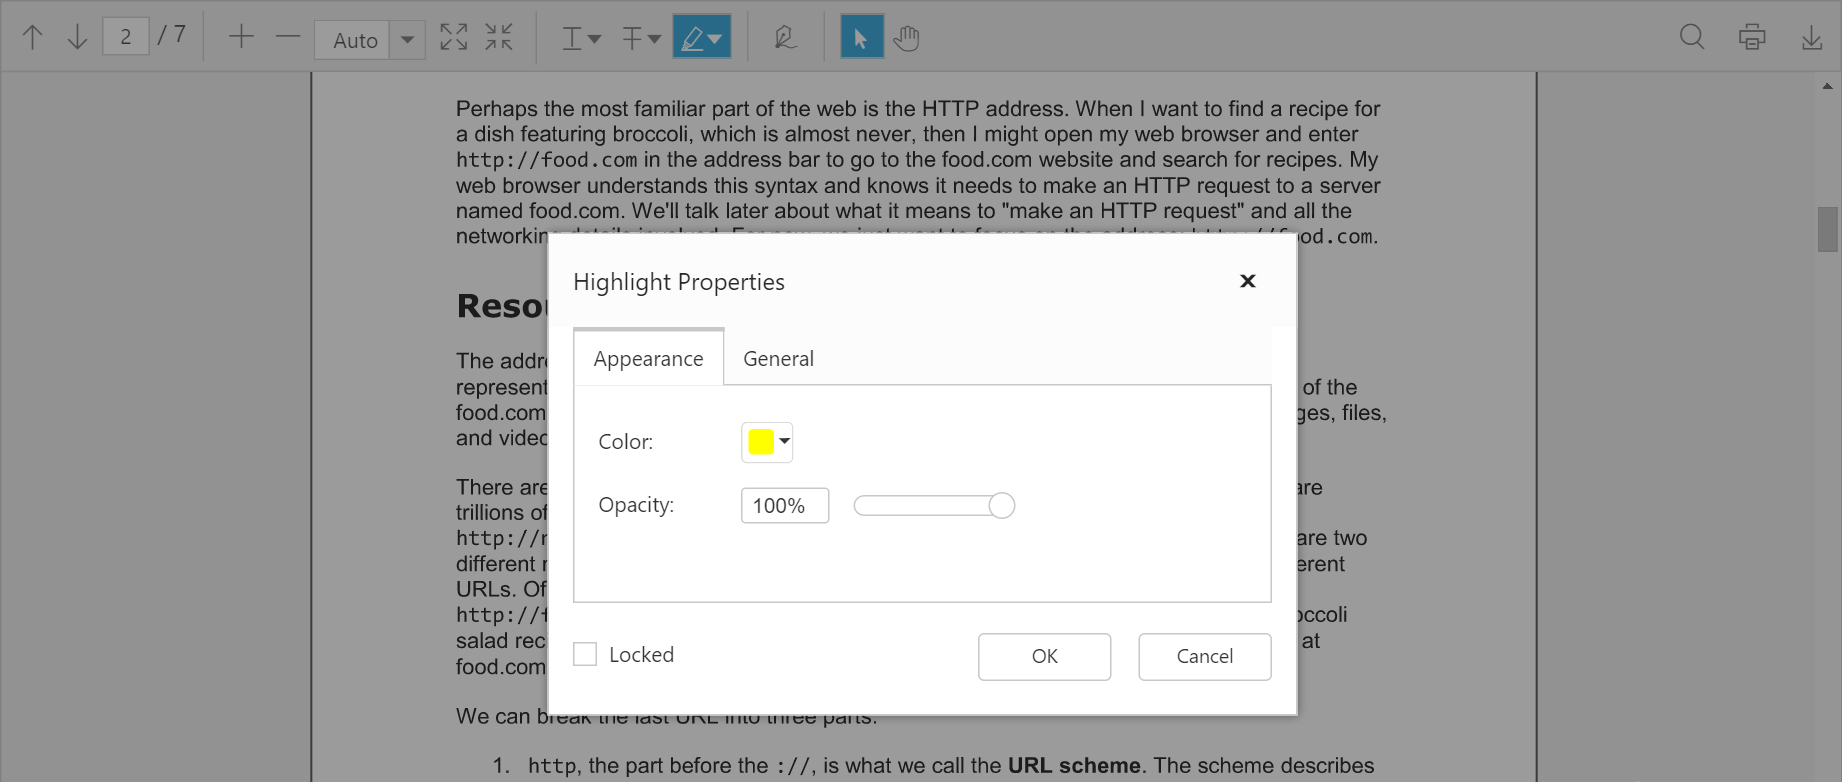 AngularJS PDF Viewer Editing the text markup annotation